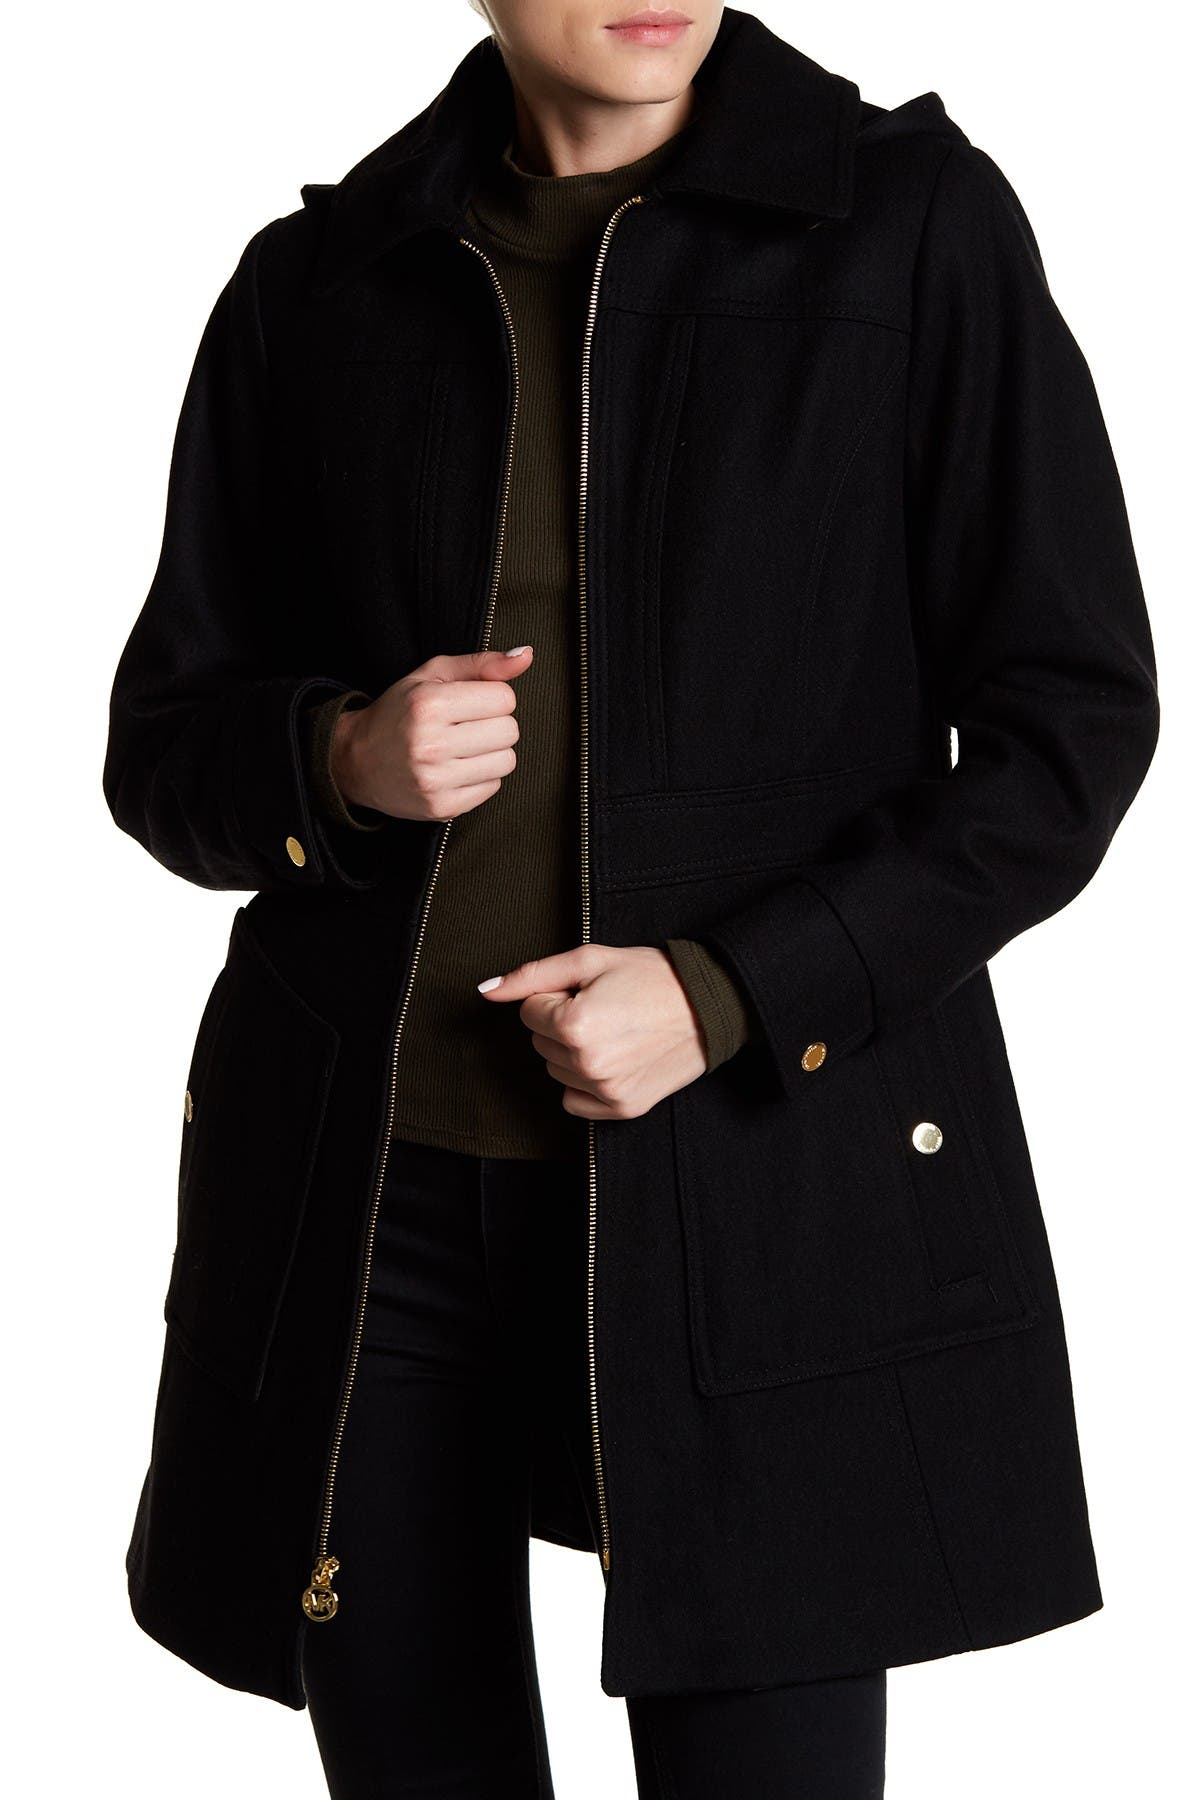 michael kors black wool coat gold zipper